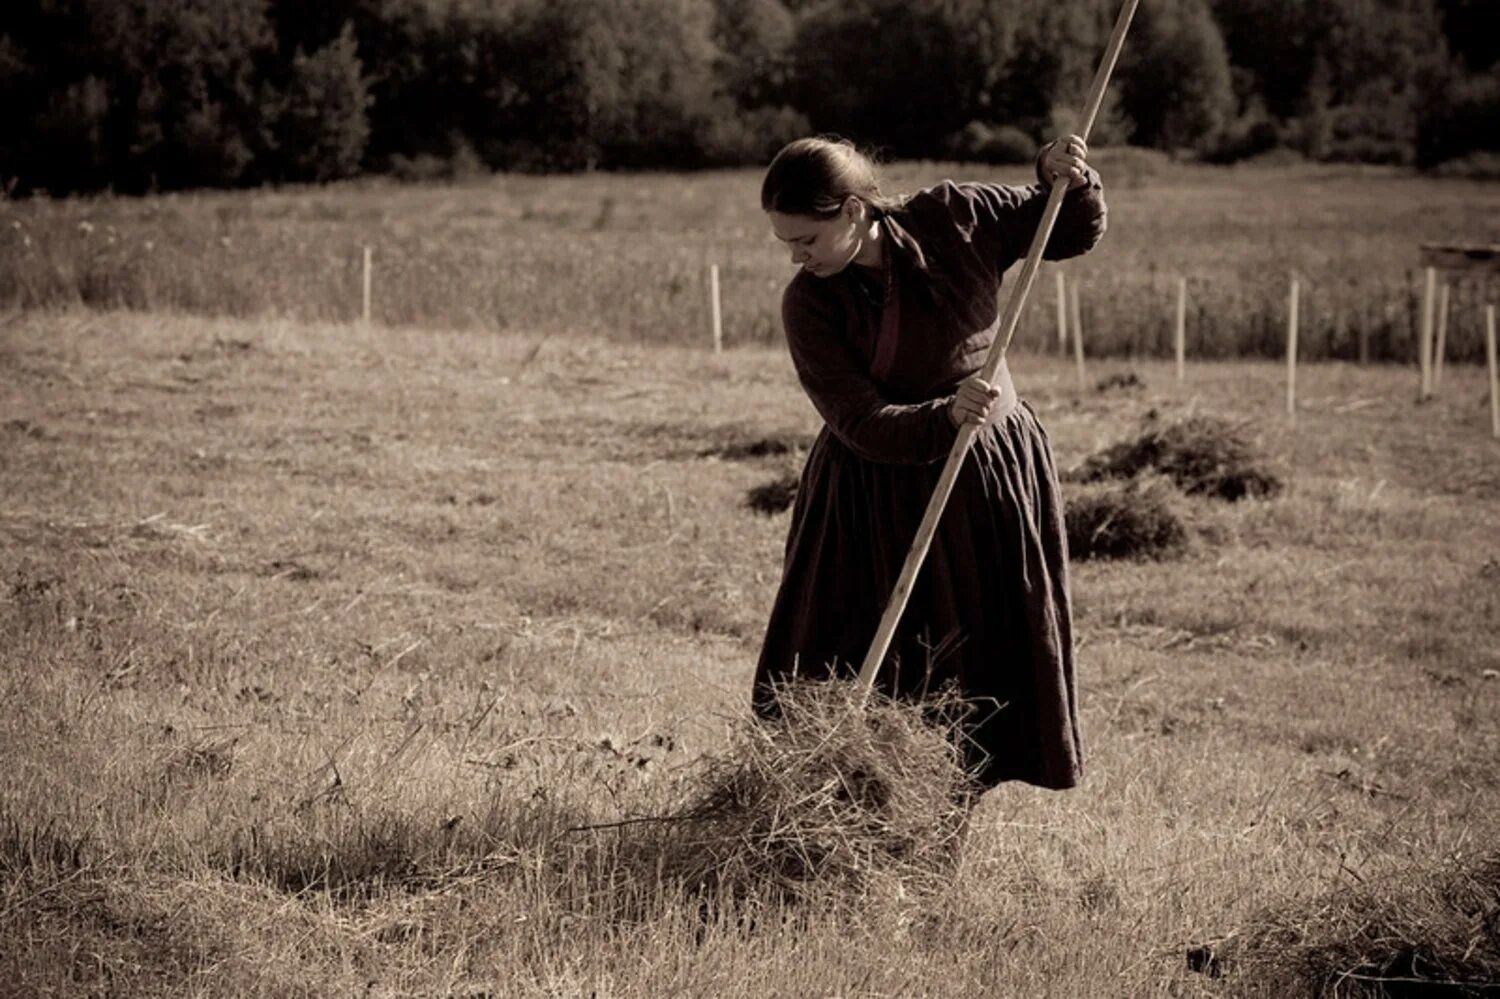 Баба на сенокосе. Женщина на покосе. Сенокос. Женщина на сенокосе. Косить траву в поле.